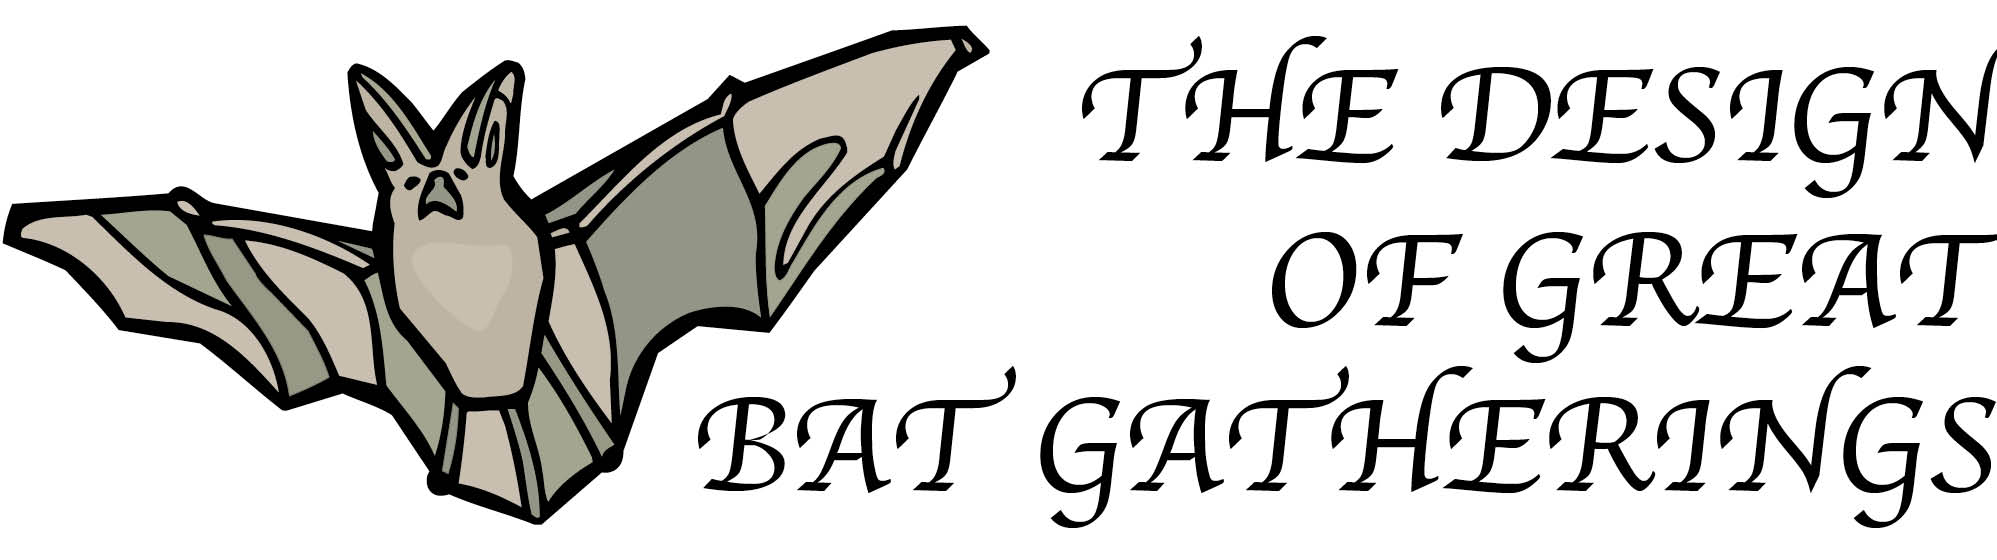 Great Bat Gartherings-title